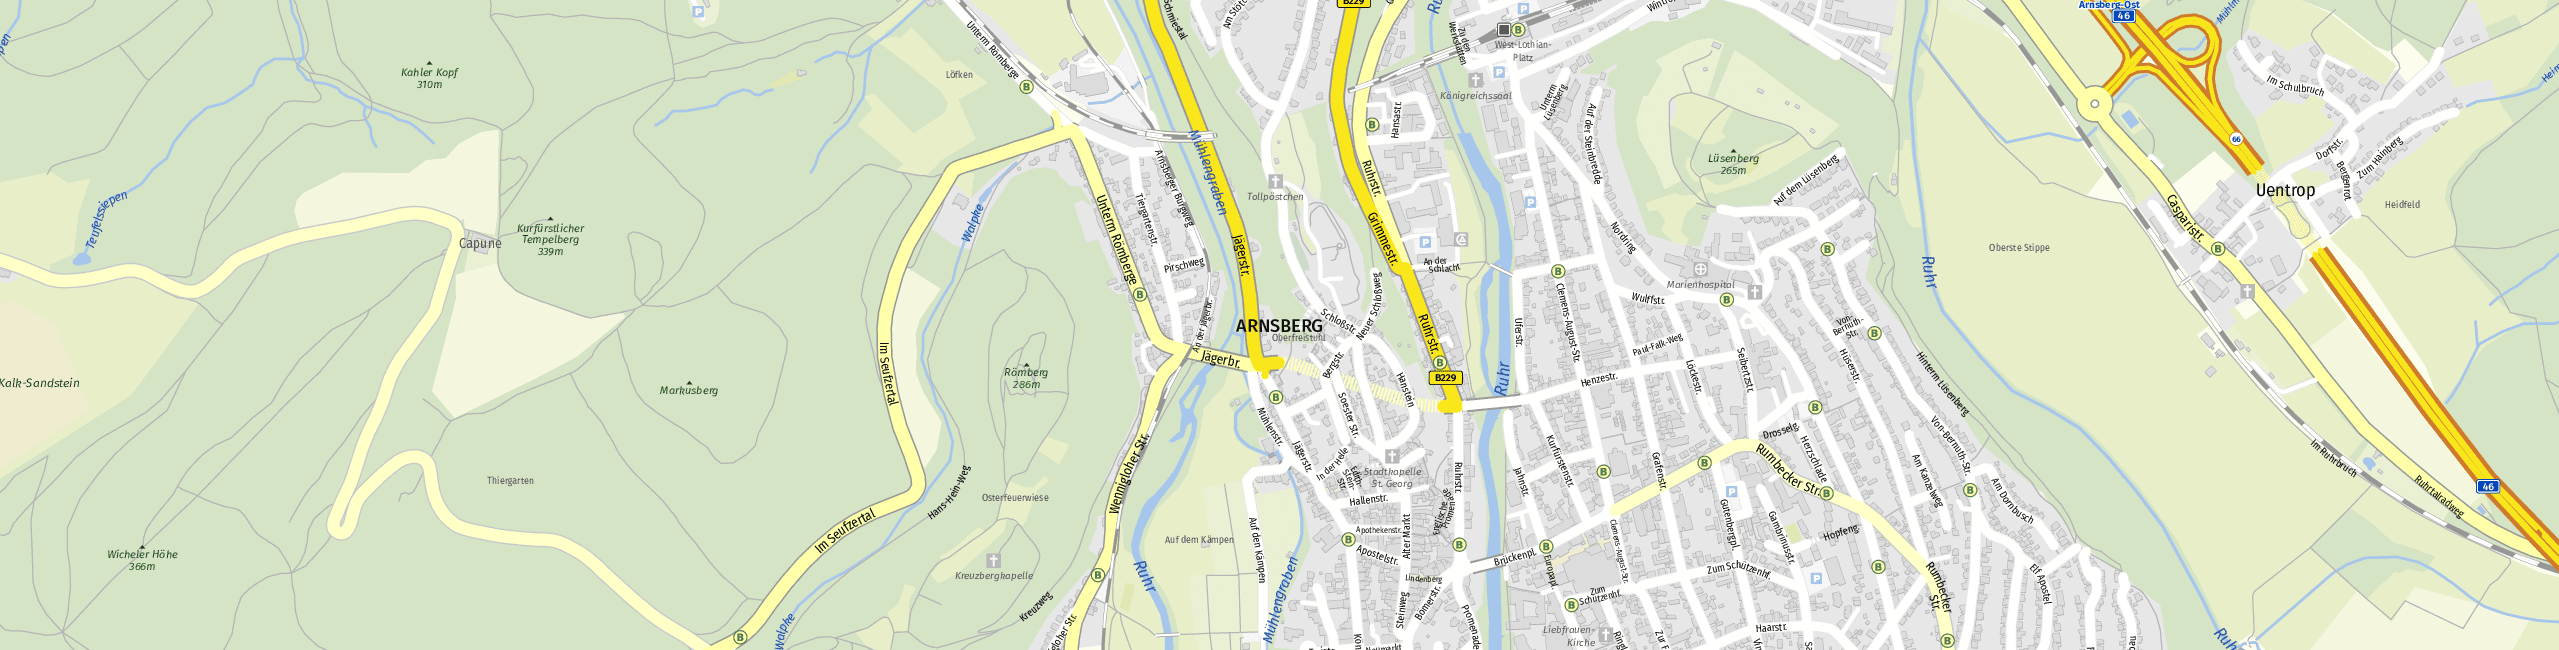 Stadtplan Arnsberg zum Downloaden.